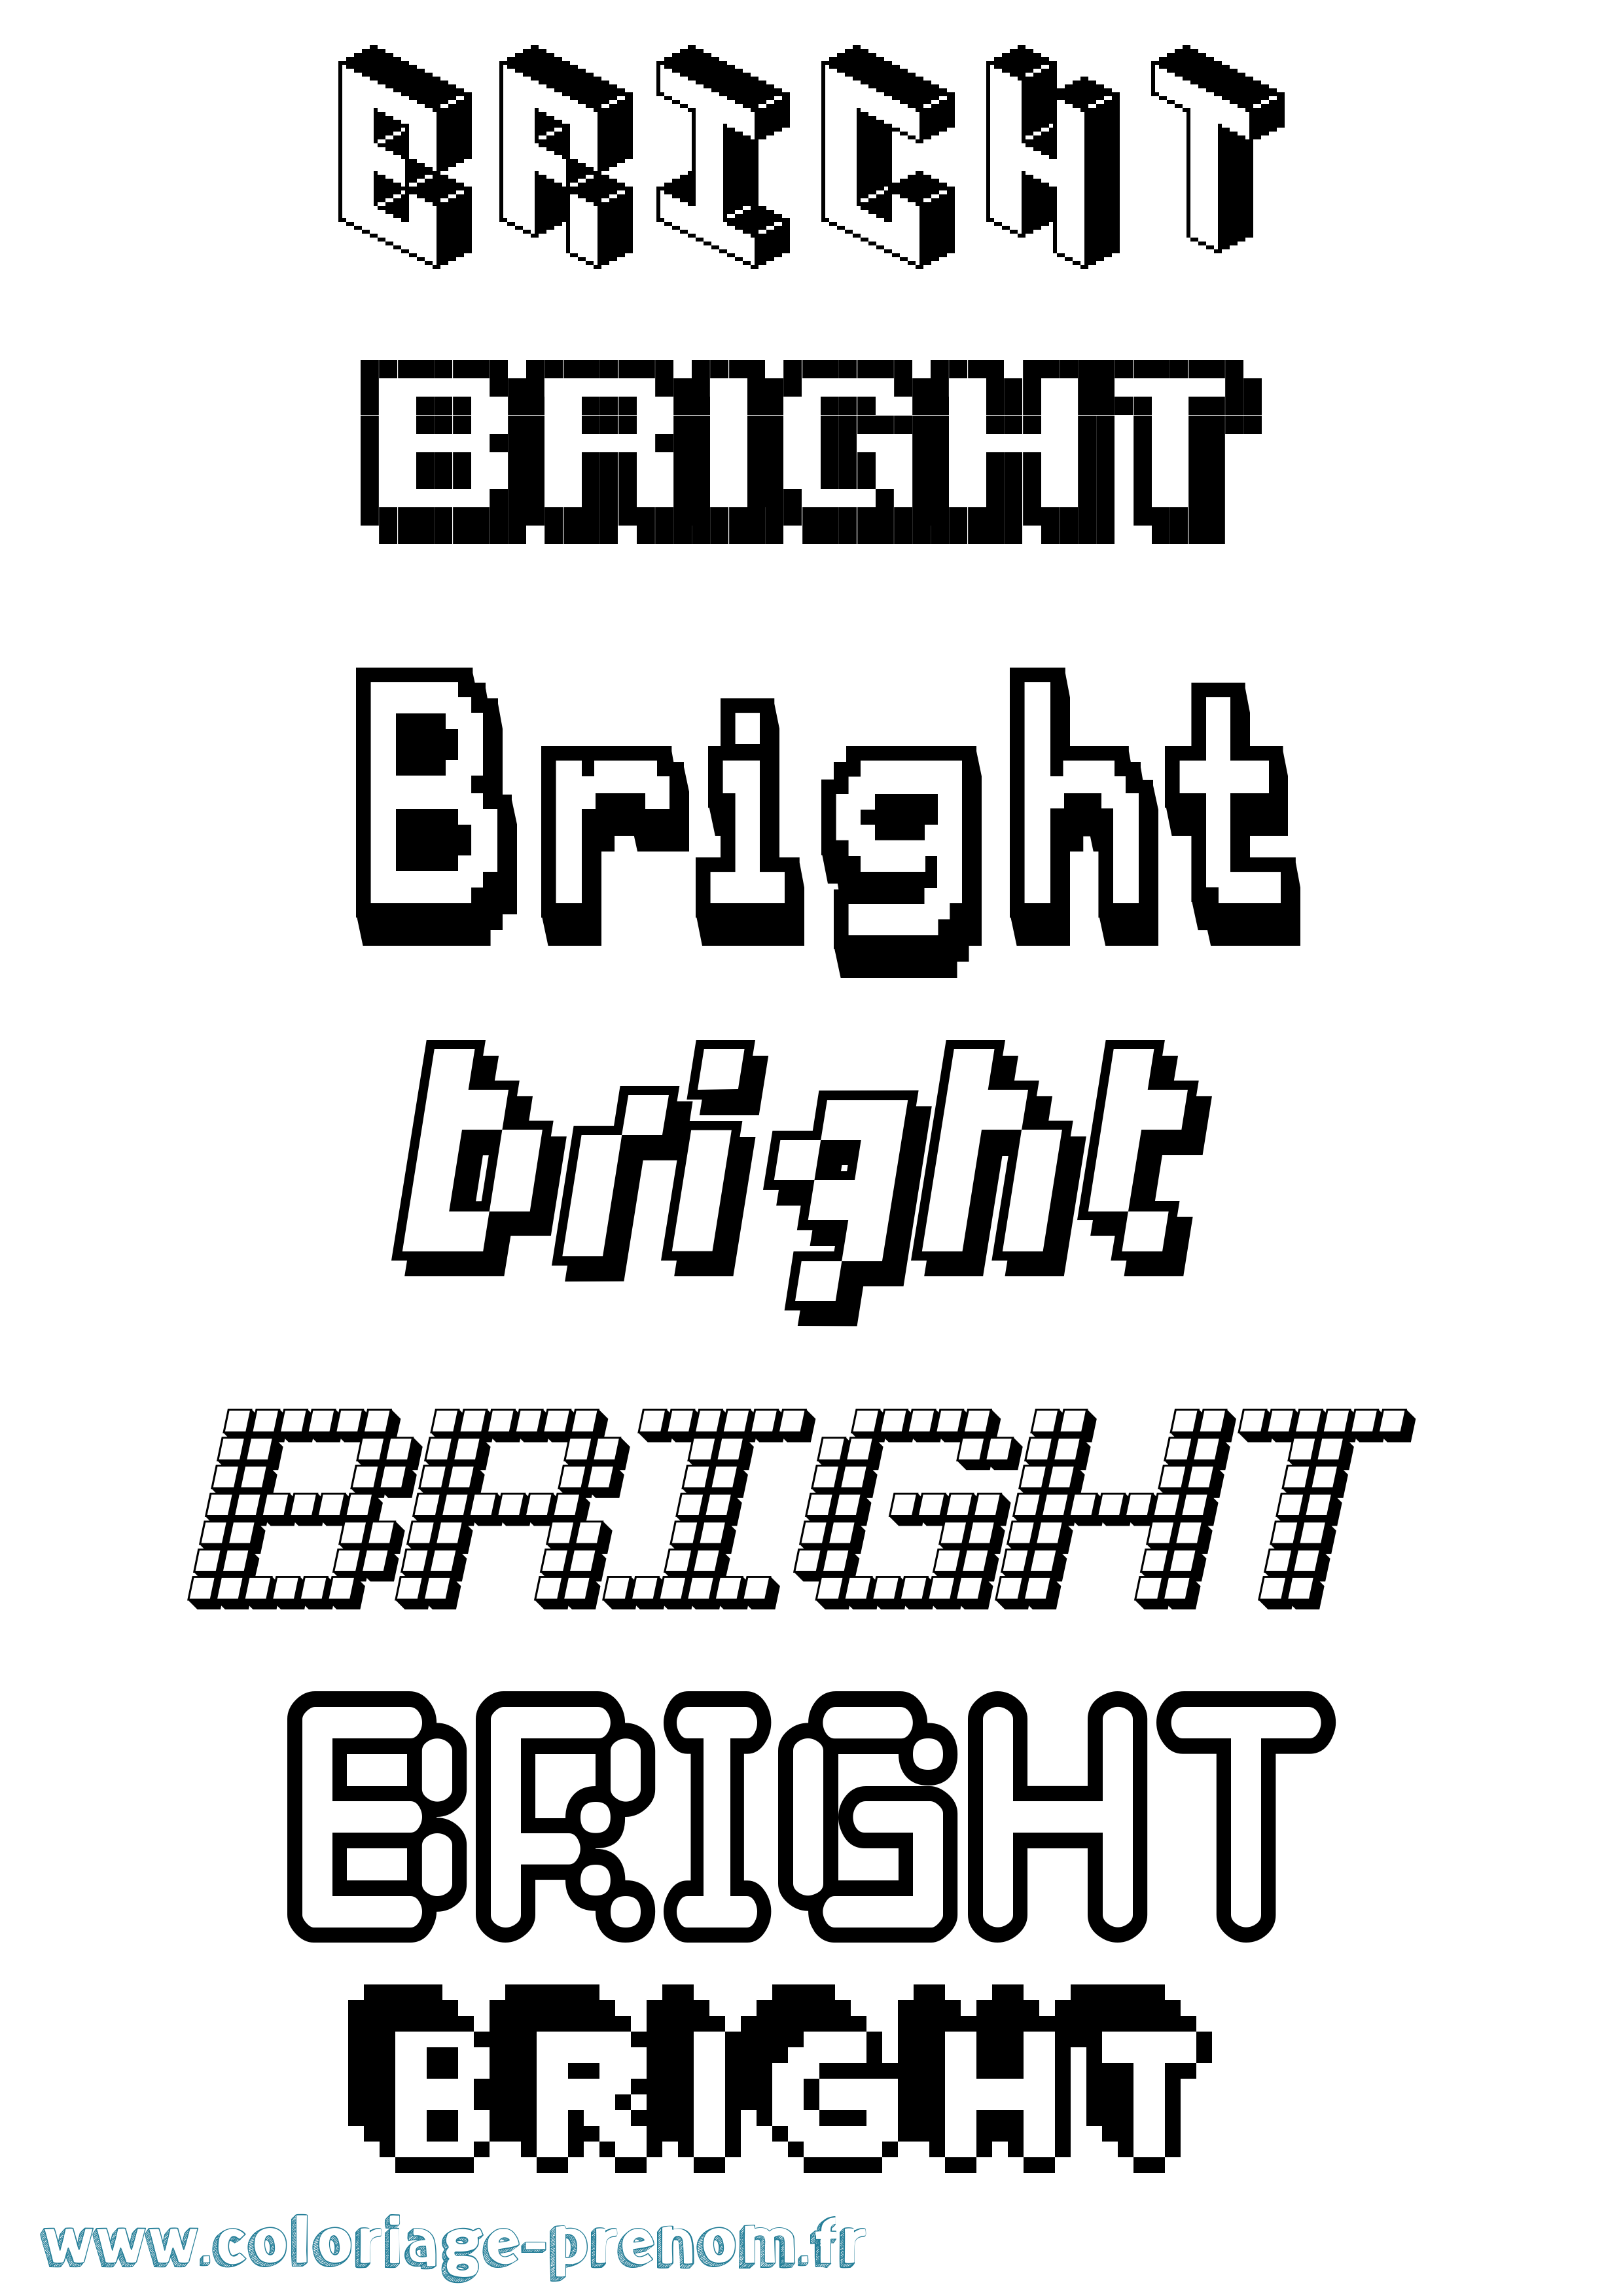 Coloriage prénom Bright Pixel